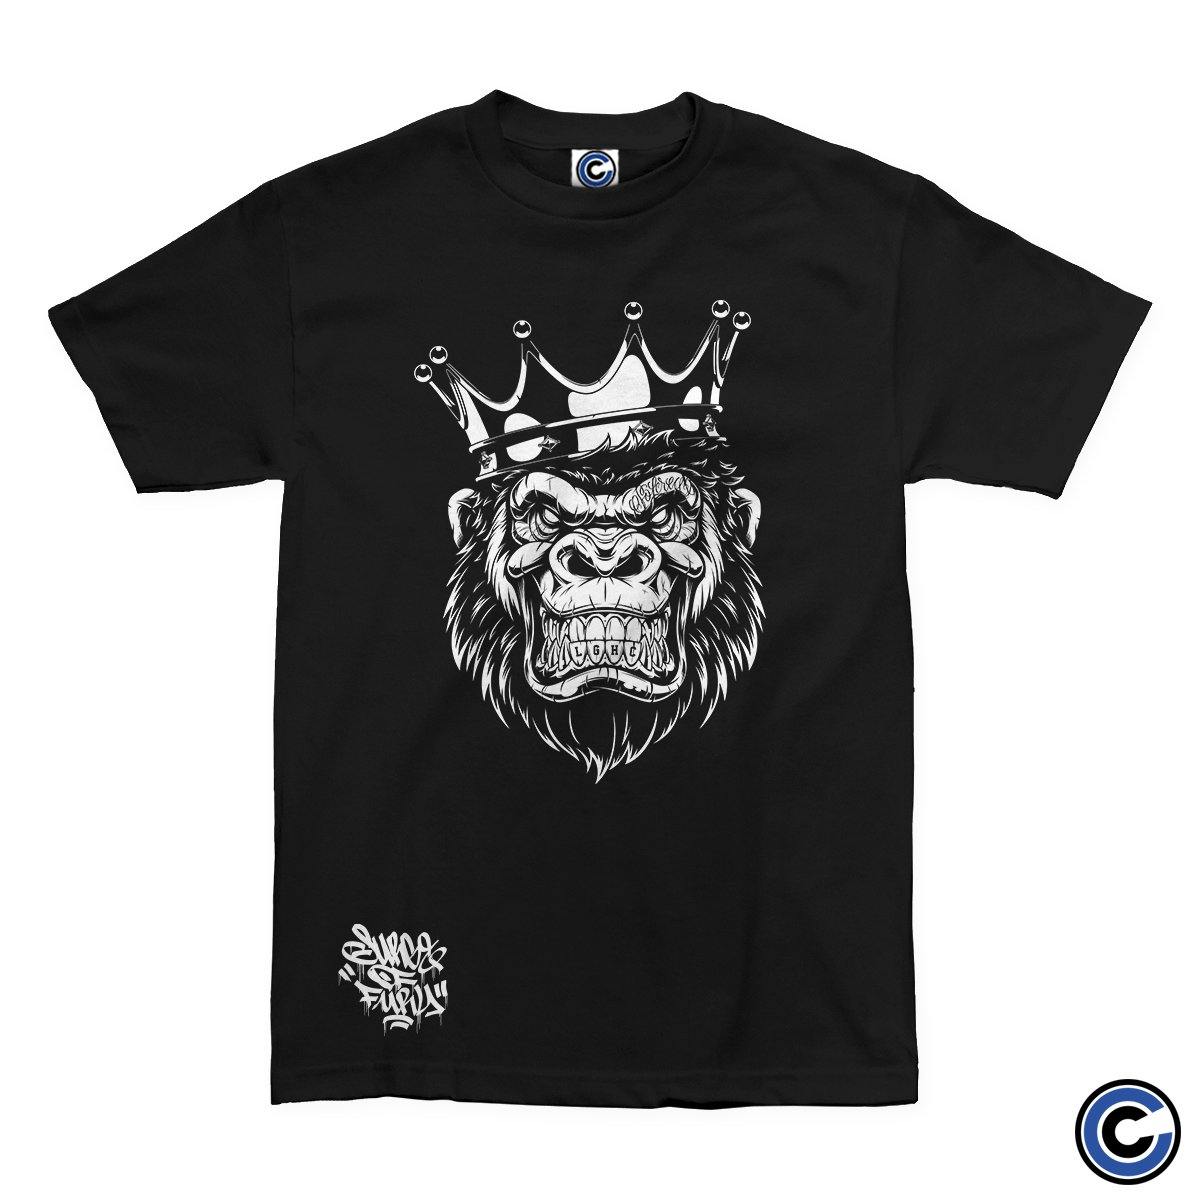 Buy – Surge of Fury "Monkey King" Shirt – Band & Music Merch – Cold Cuts Merch